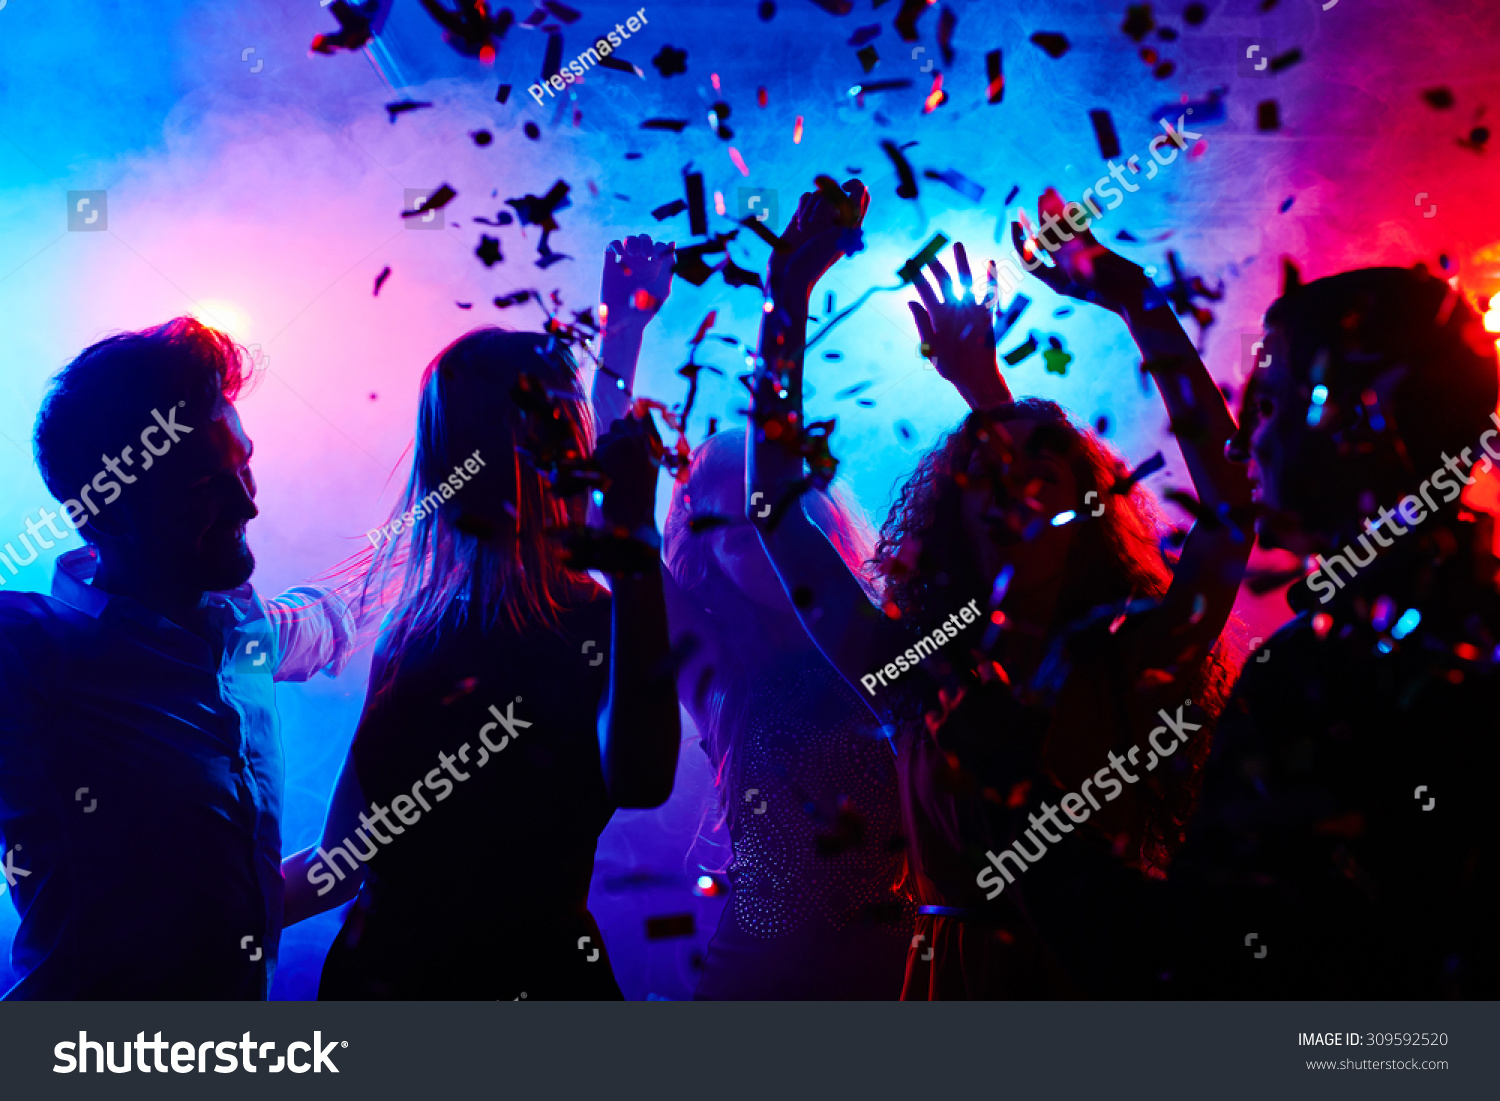 Dancing people at nightclub on Halloween night #309592520